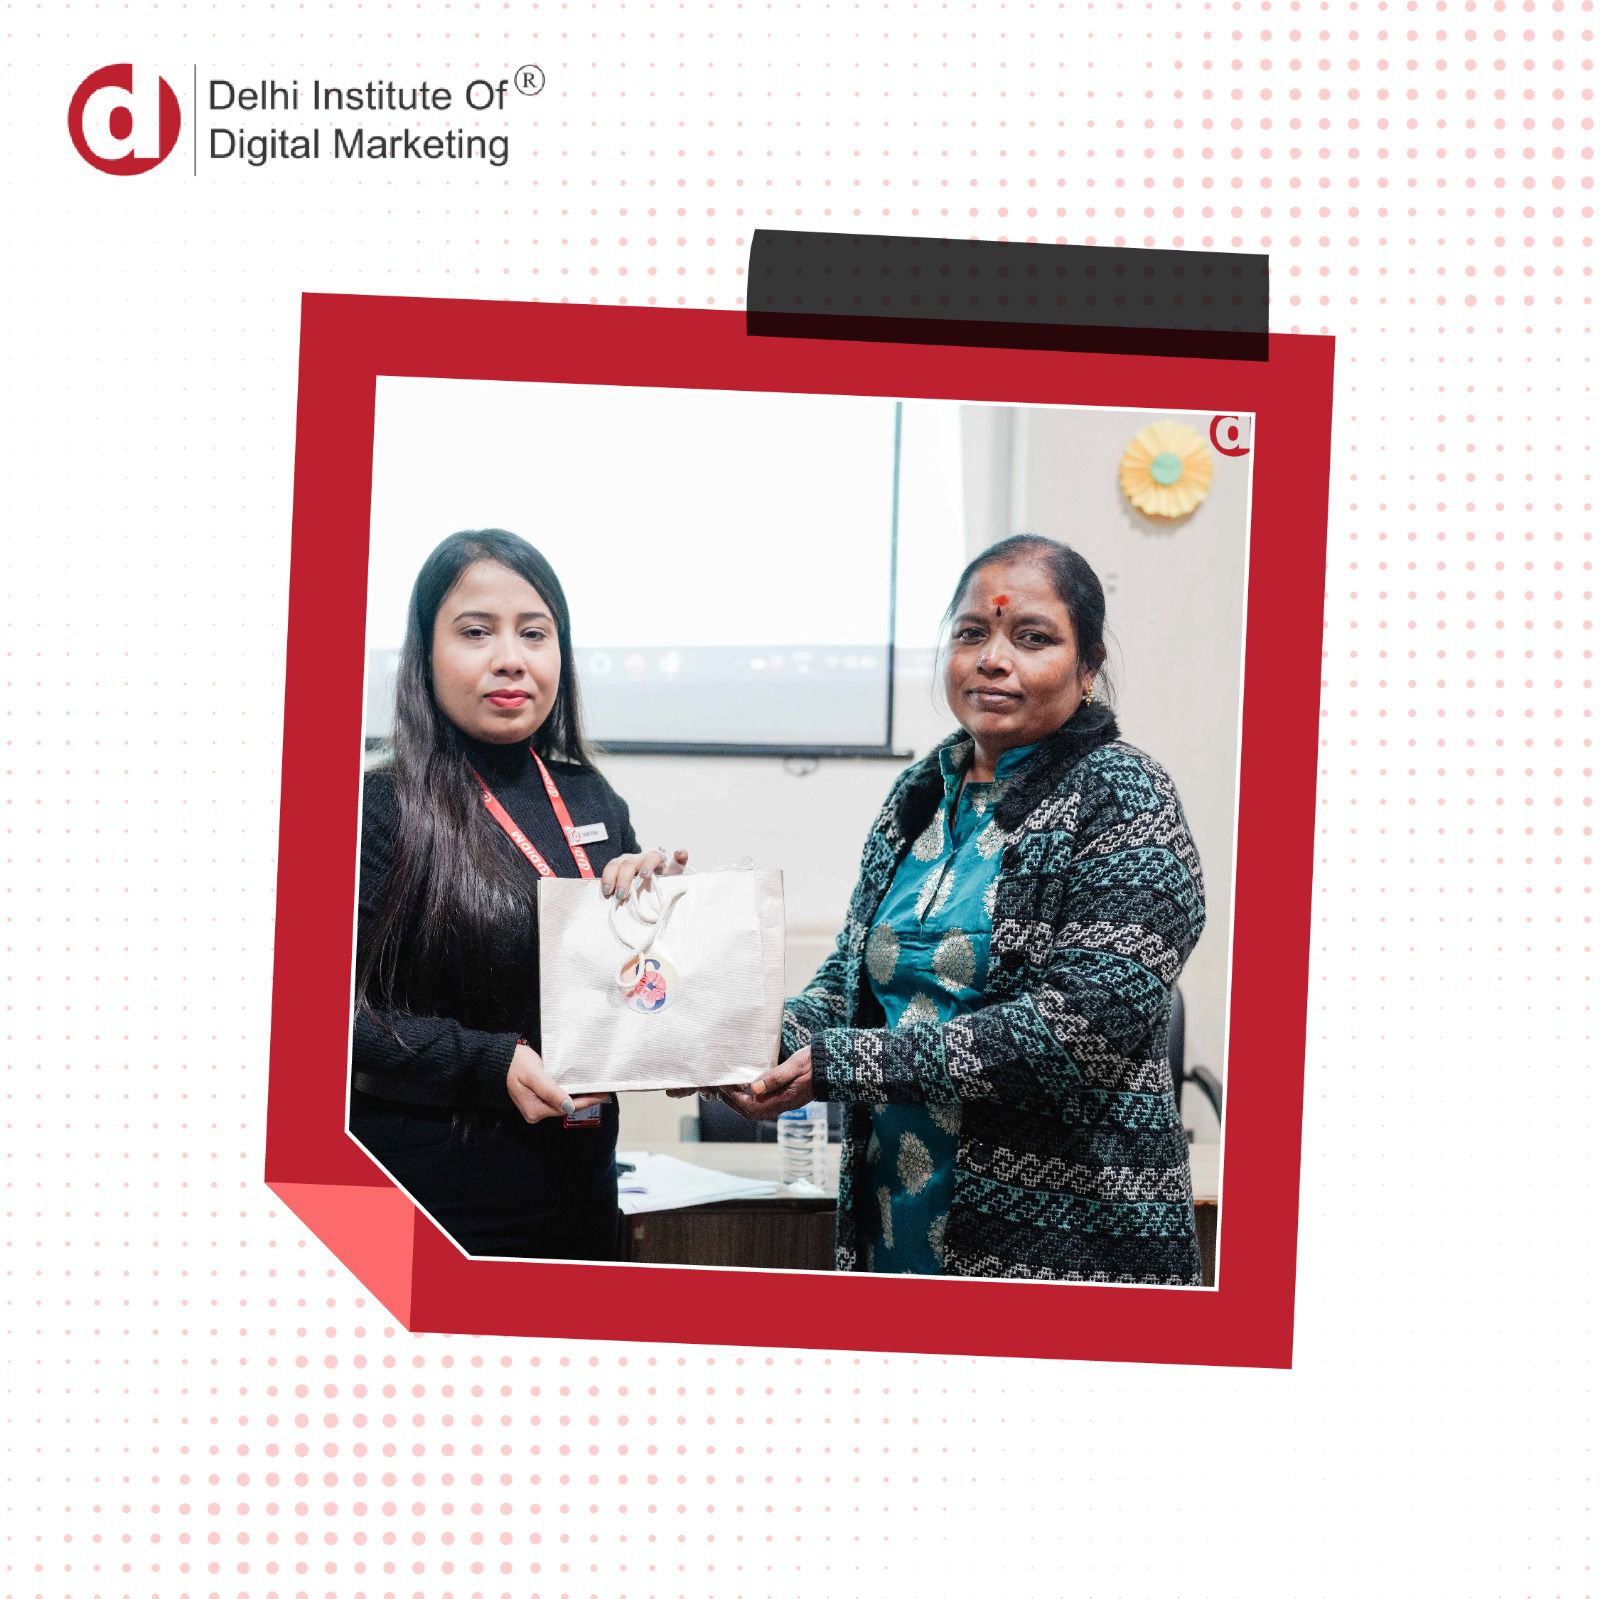 DIDM Succesfully Conducts A Digital Marketing Seminar At Lakshmibai College DU